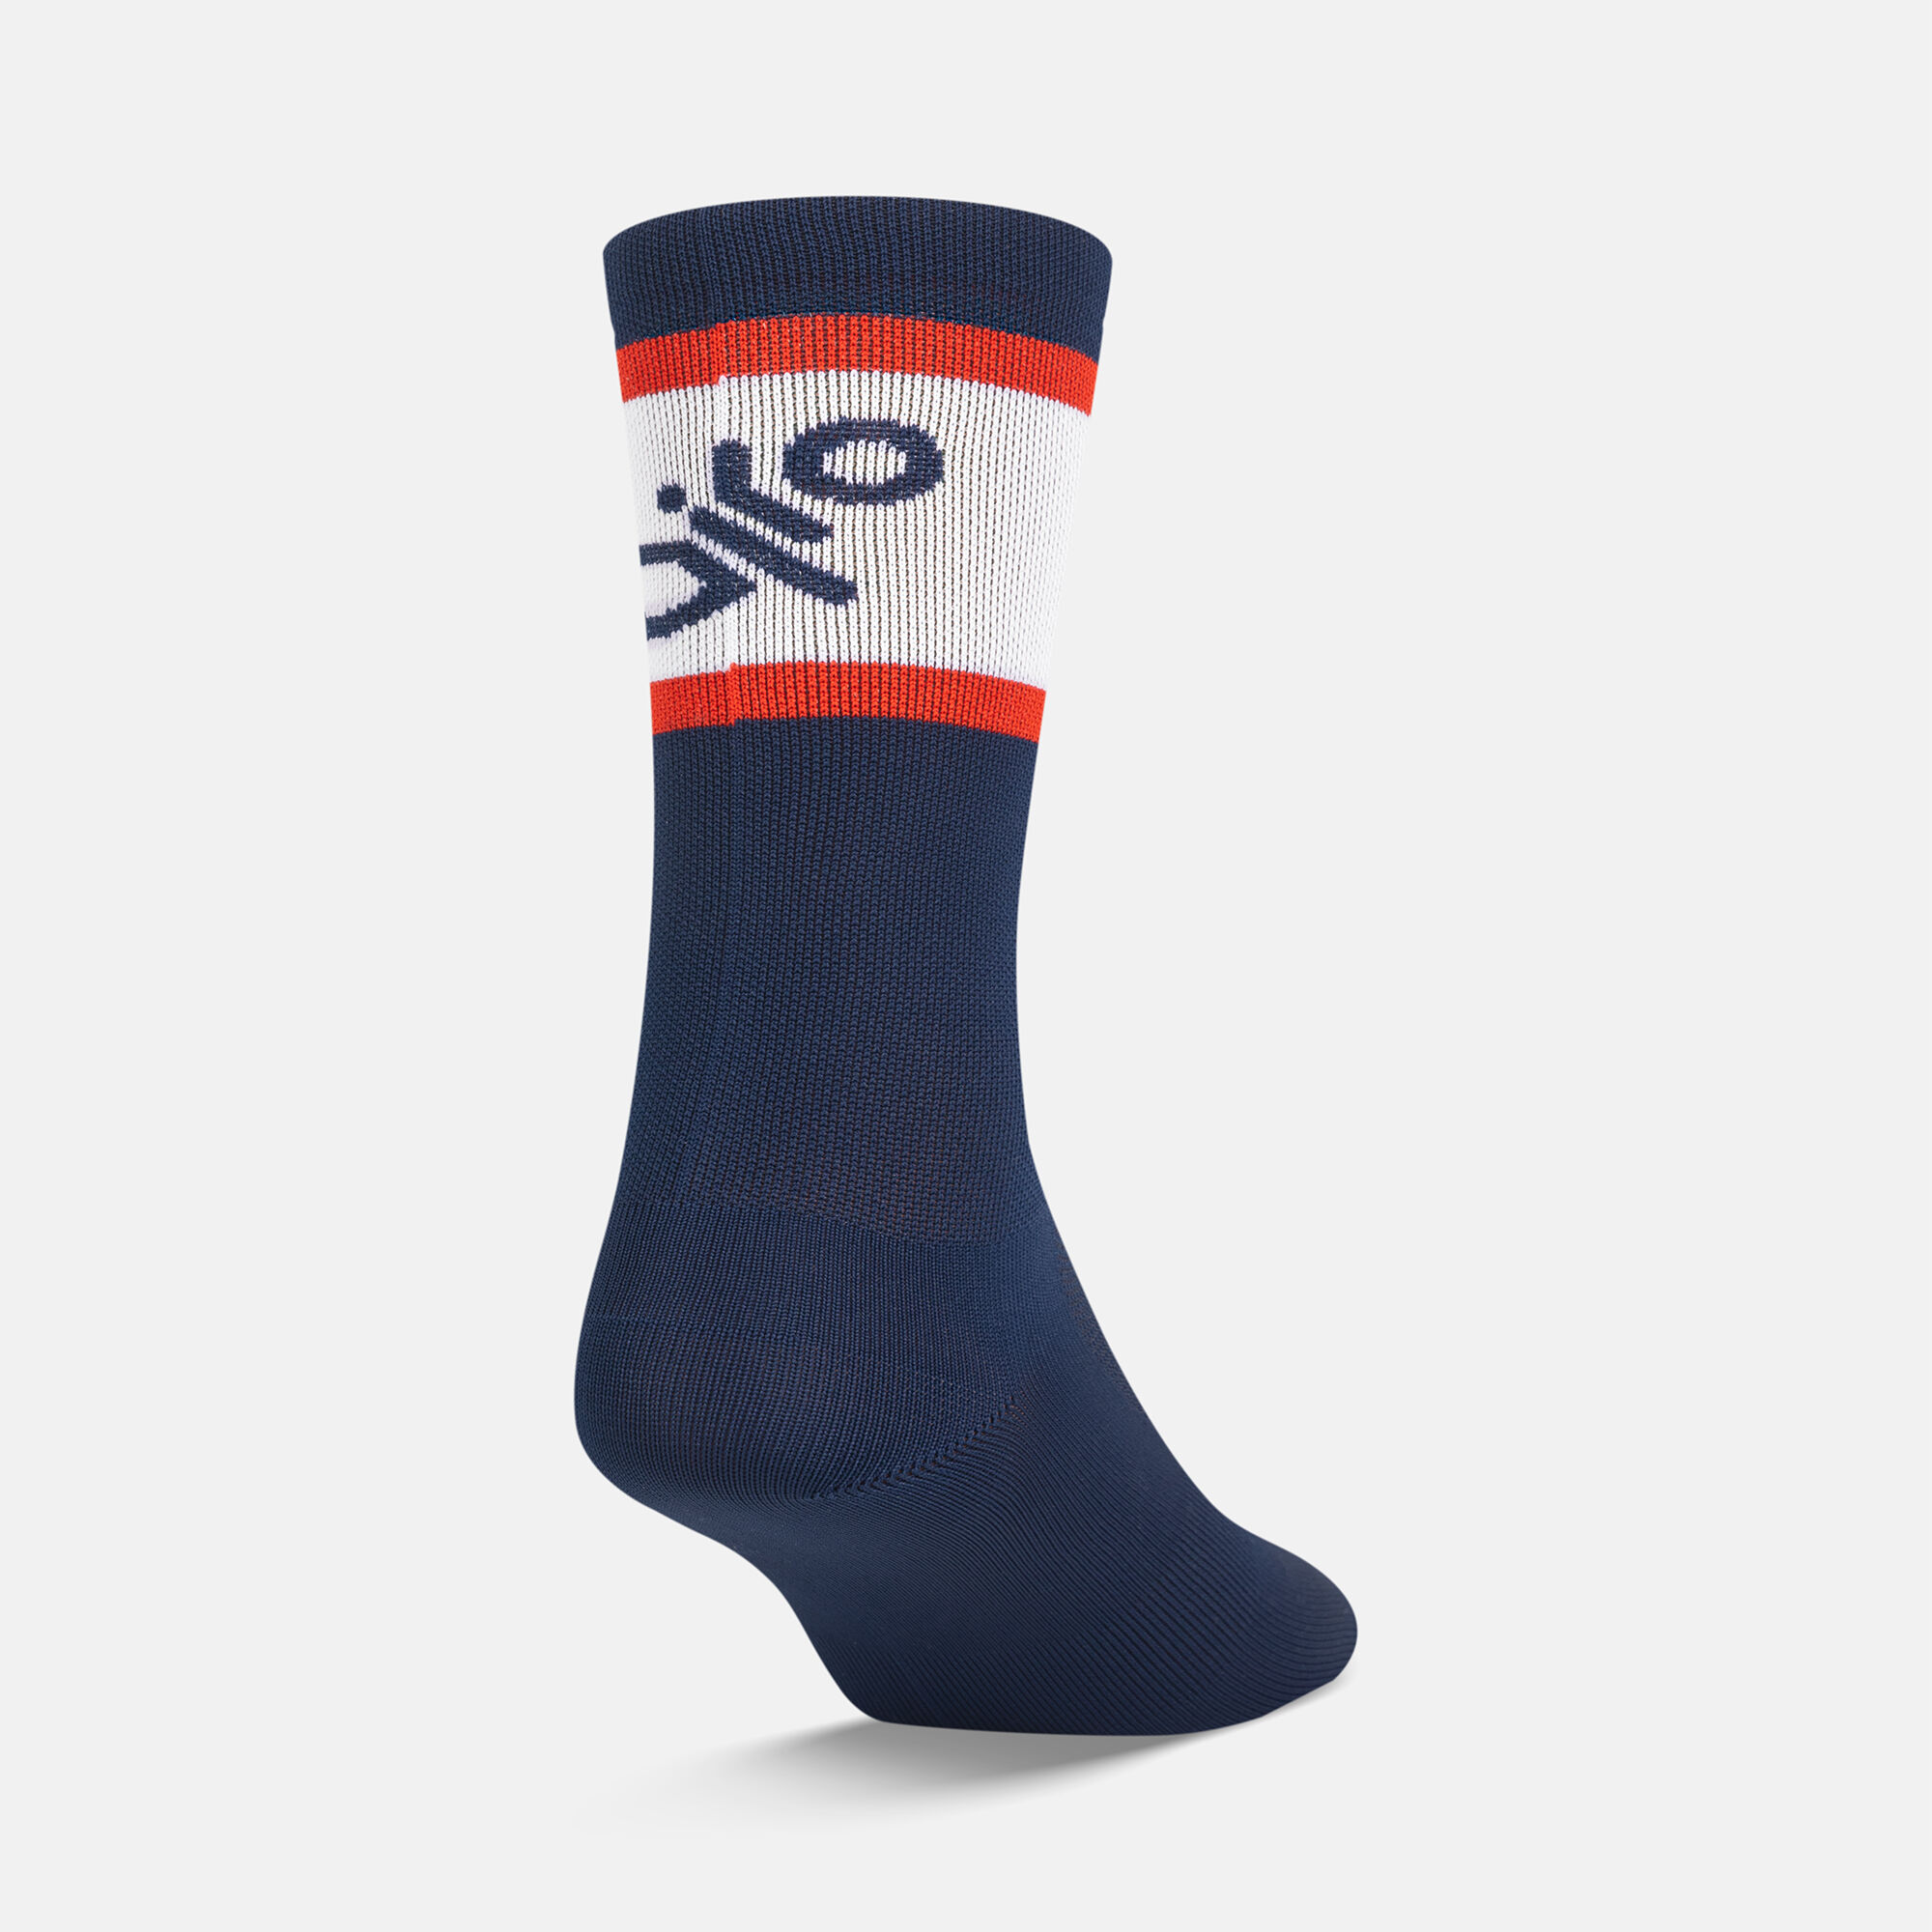 Giro Comp Racer High Rise Calf Cycling Socks Sizes S M L XL 